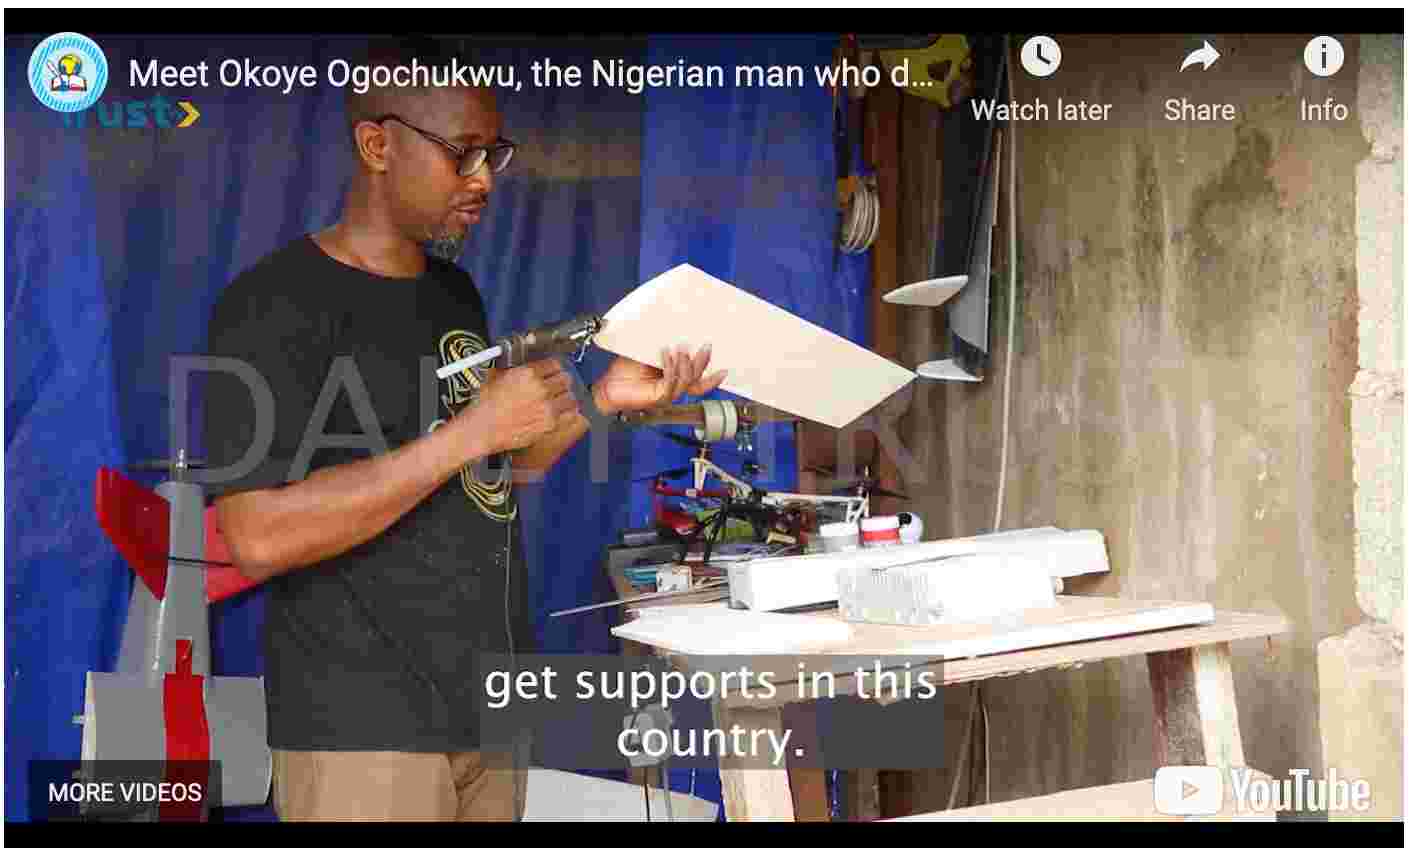 Meet Nigerian man who develops drones